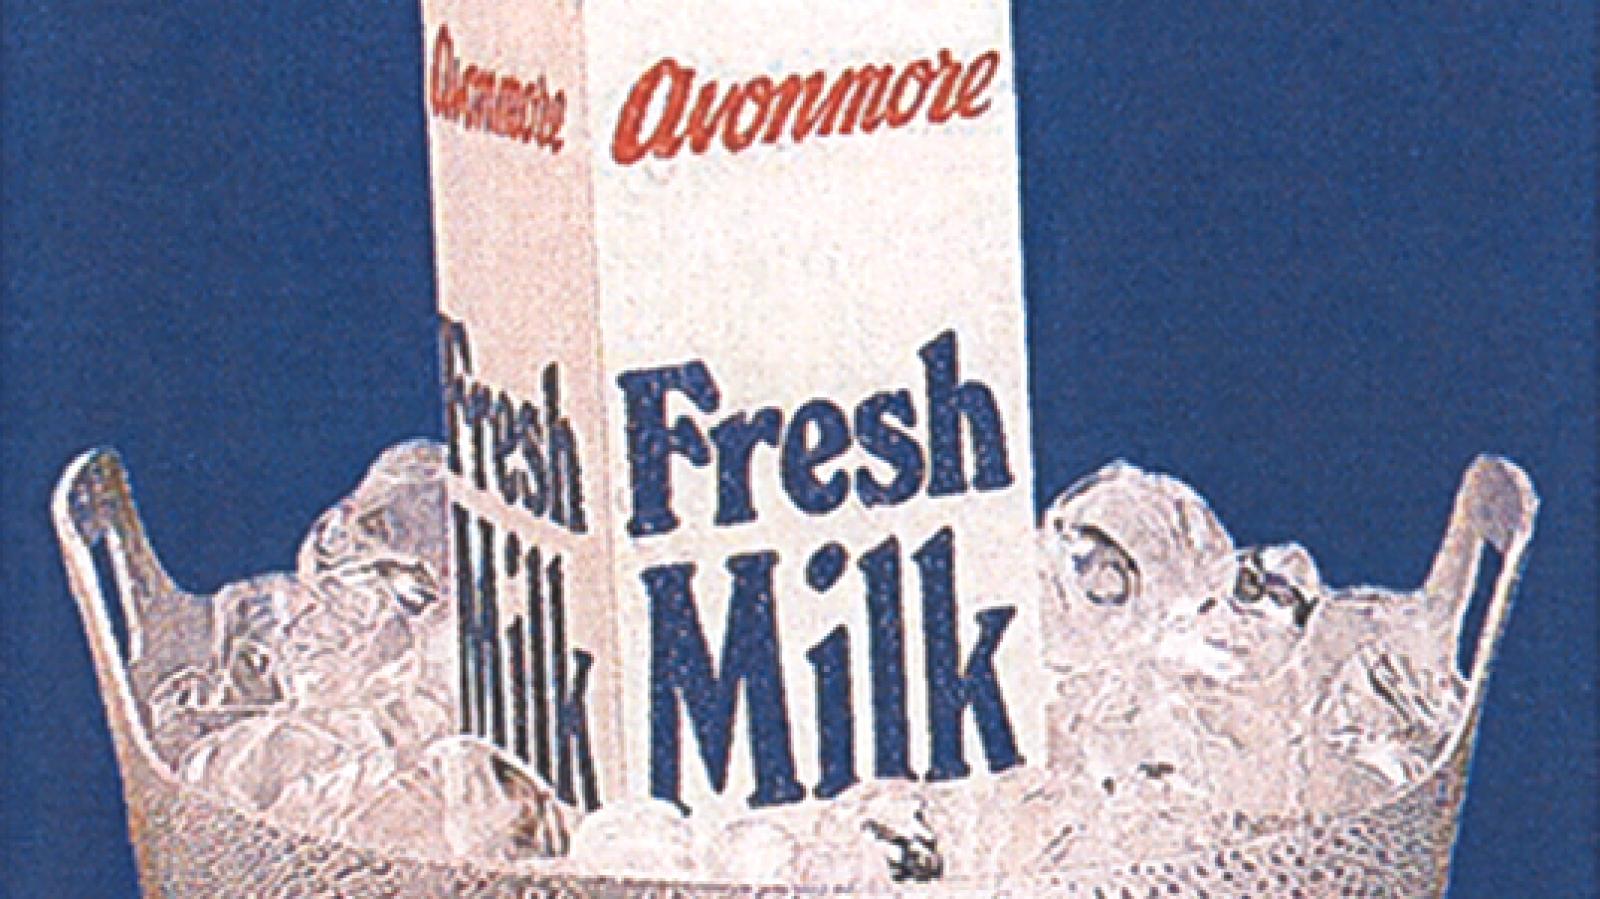 Avonmore milk carton from 1981